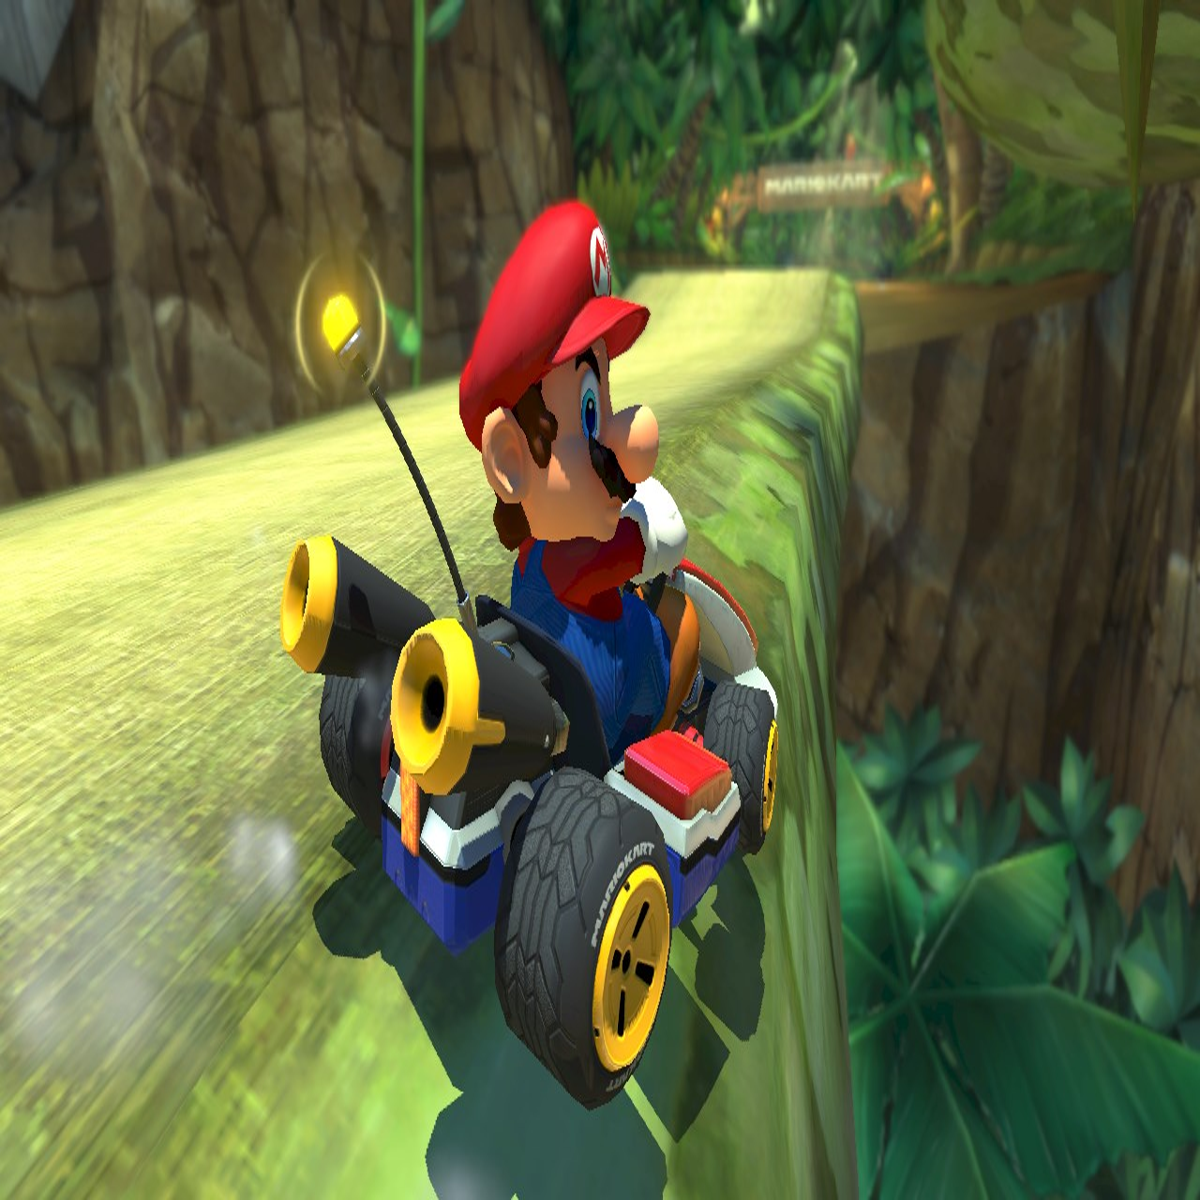 GAMING ROCKS ON: Mario Kart 8 Deluxe is Making Me Love Bowser Jr.